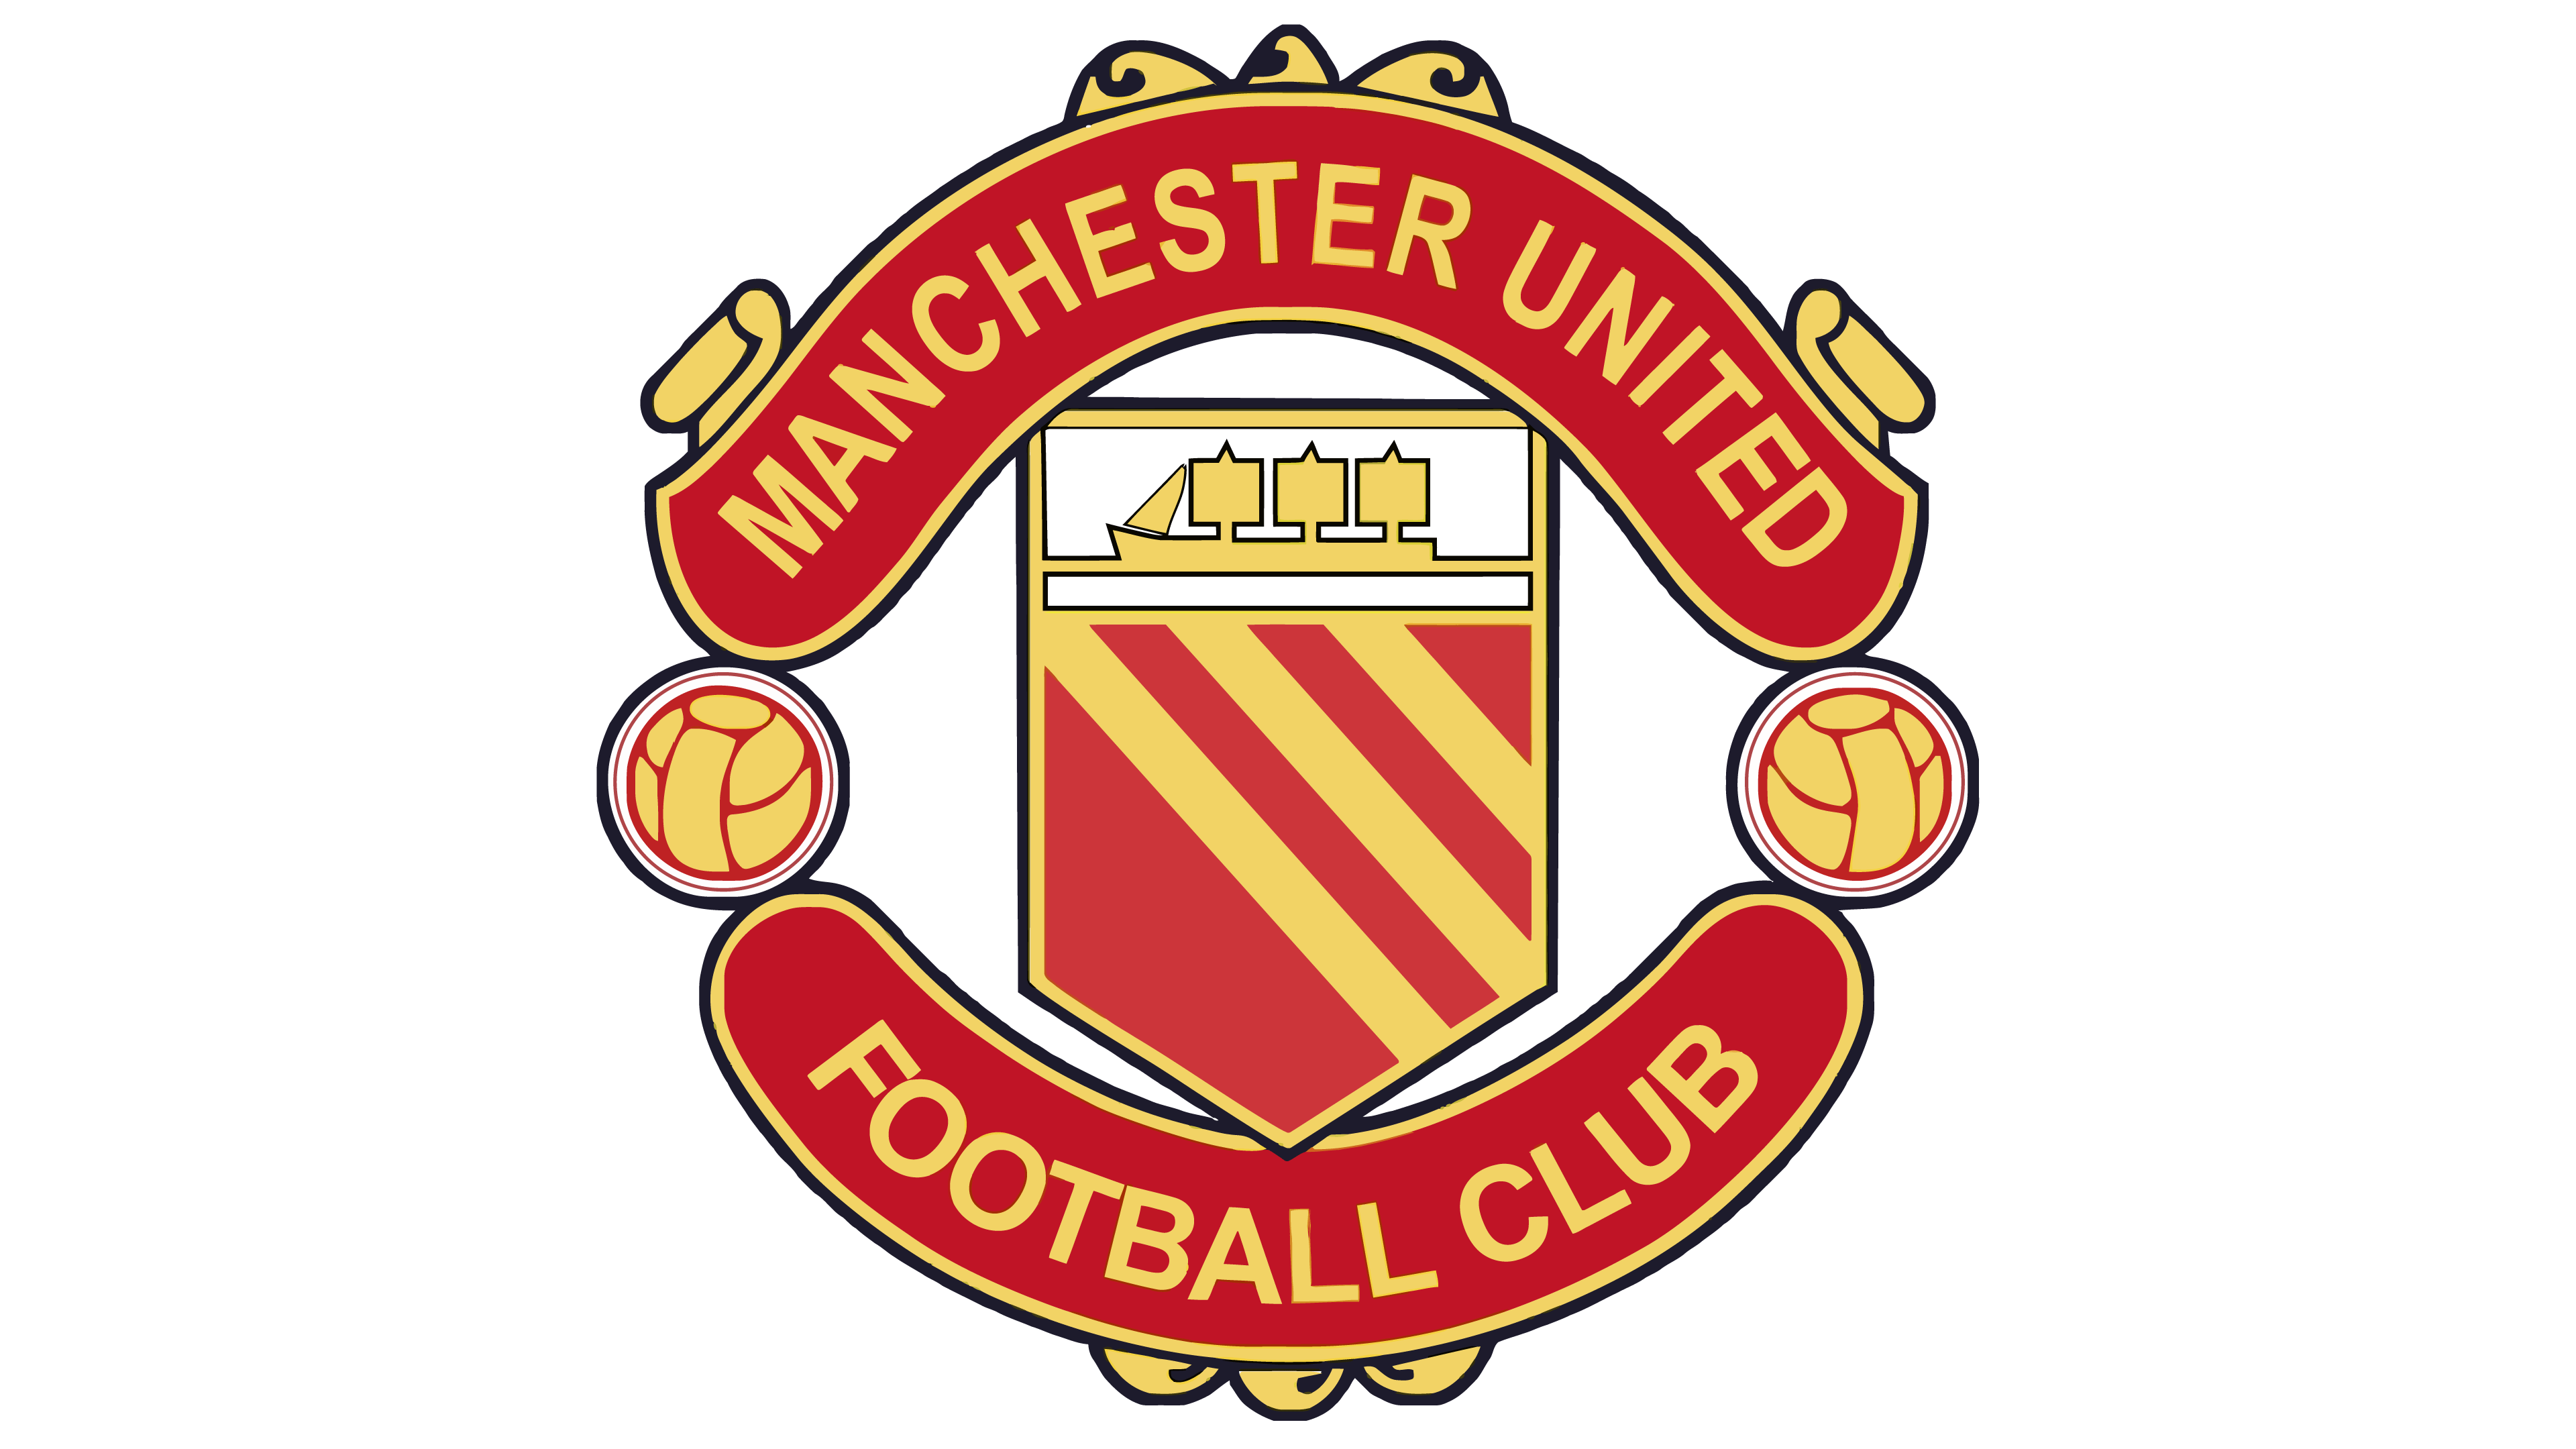 United Old Logo - Manchester United logo - Interesting History Team Name and emblem